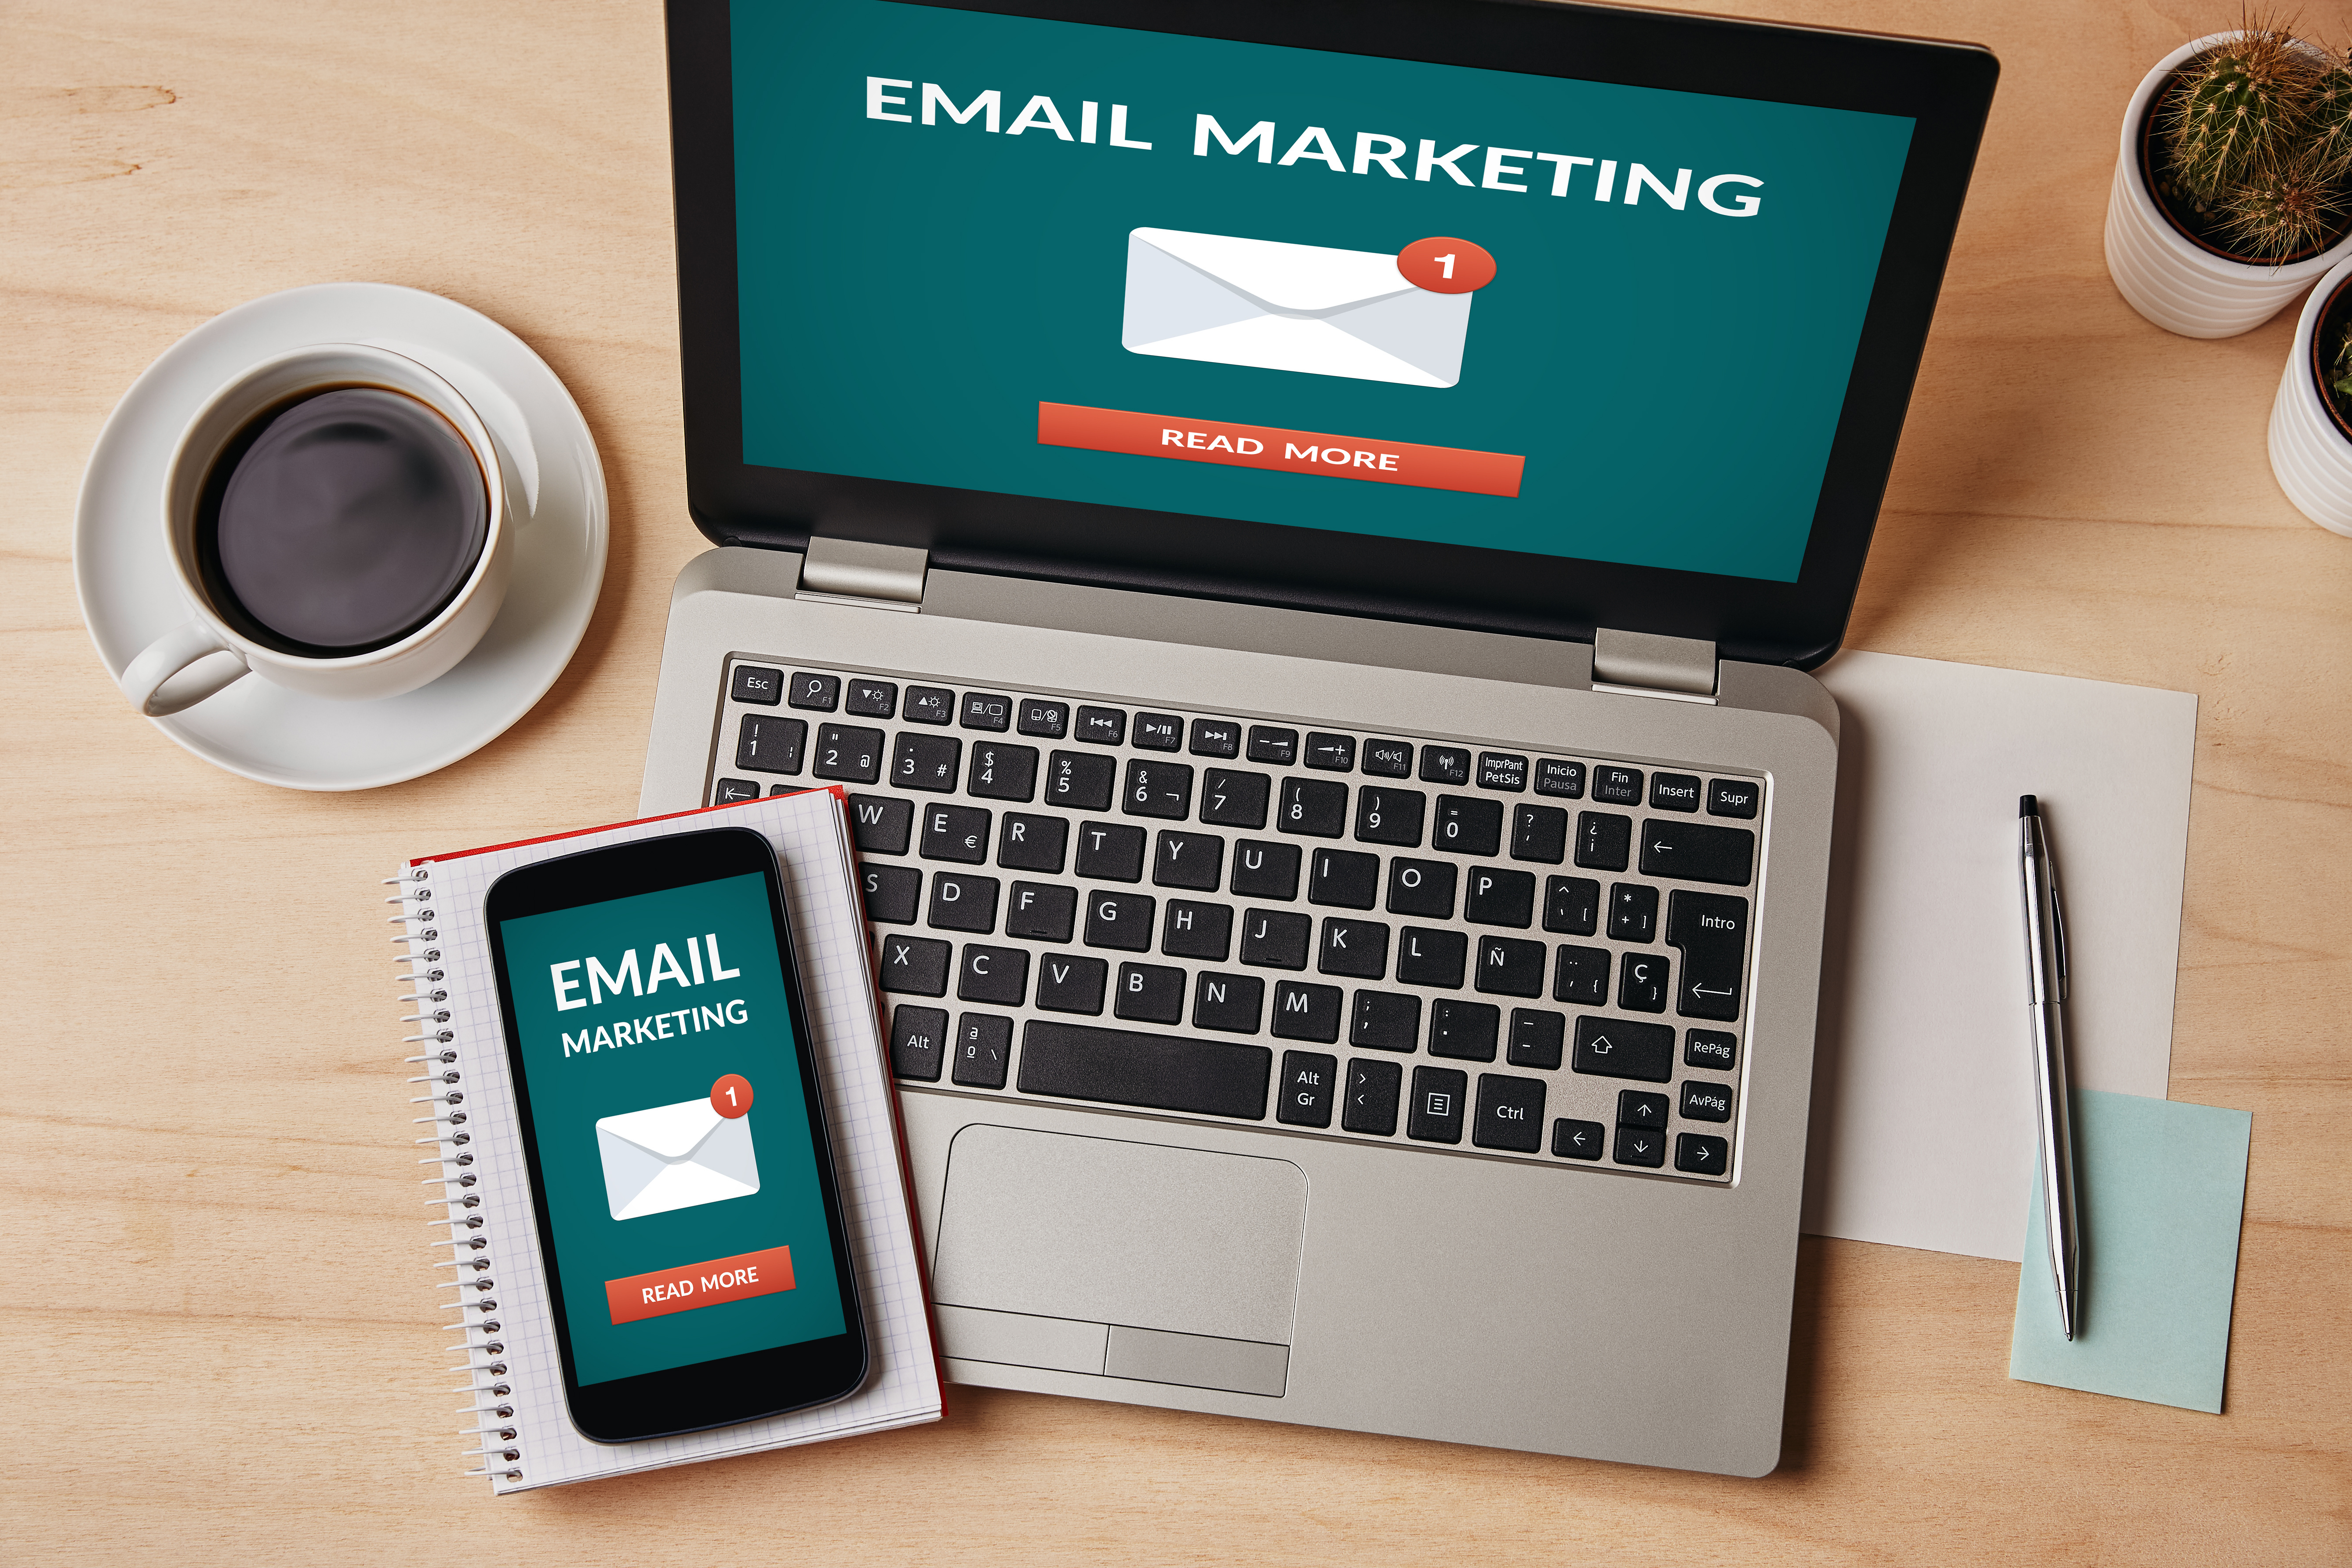 Inbox Influence: Email Marketing Benefits, Part 1